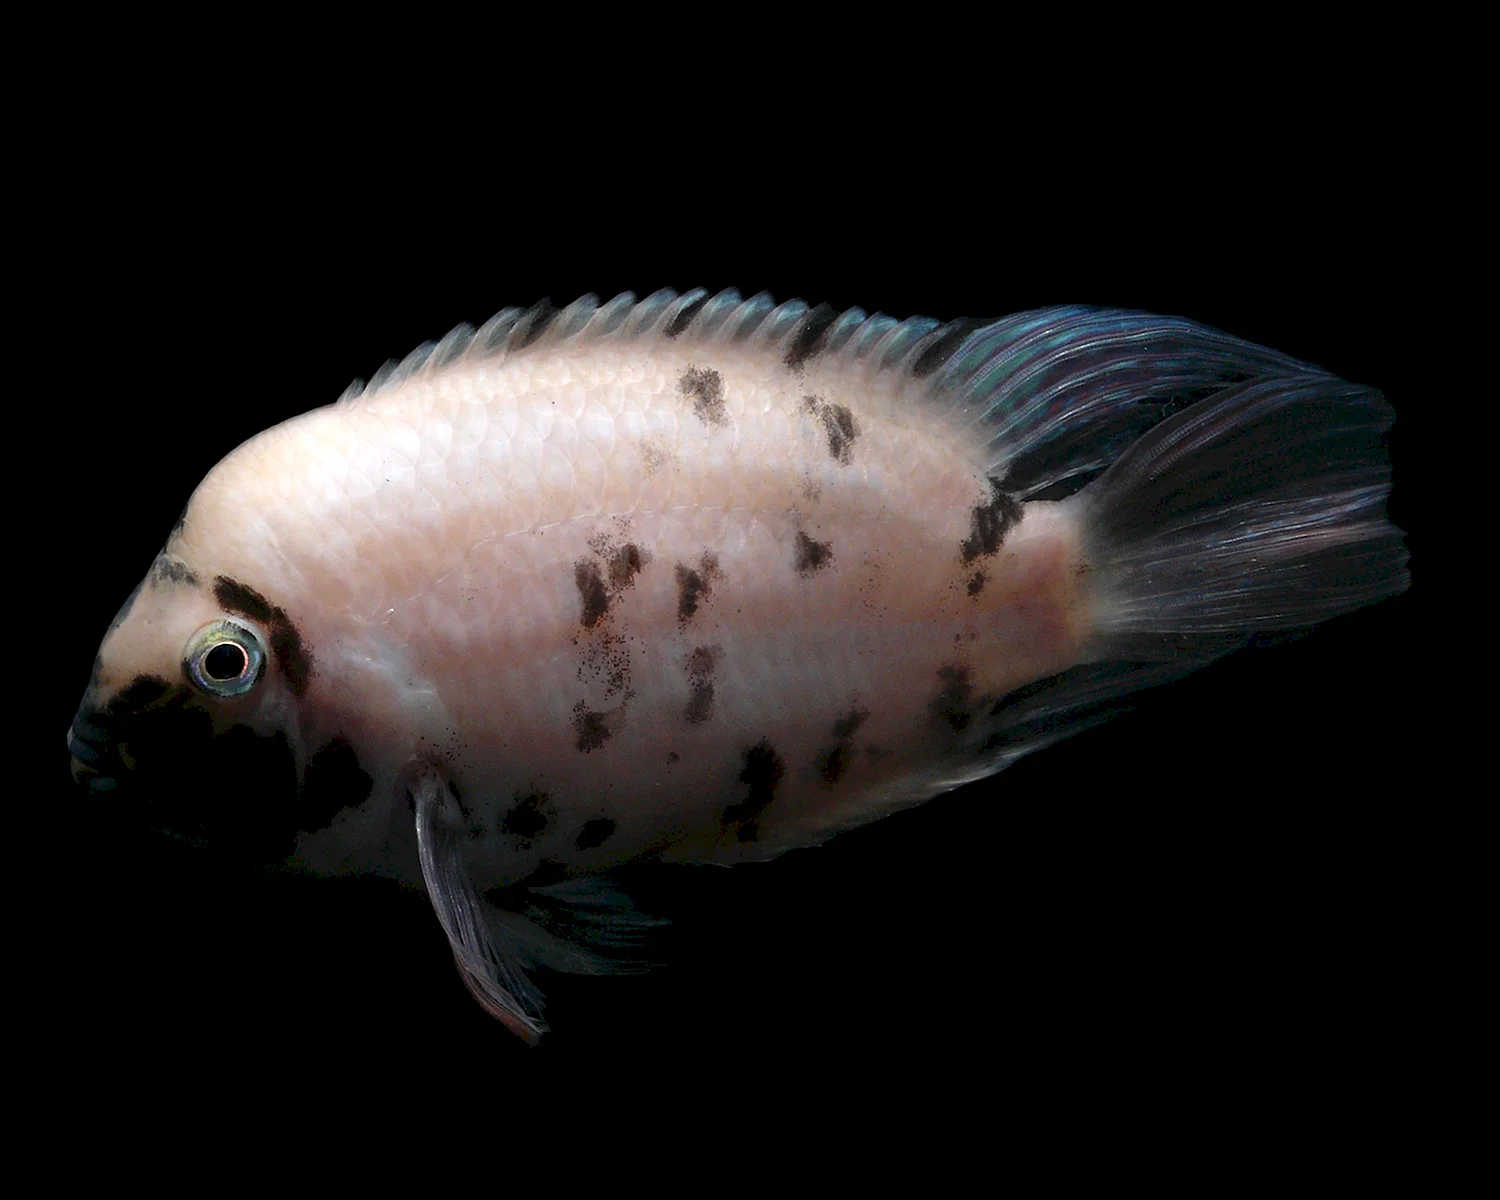 Рыба окрас с ромбиками на спине